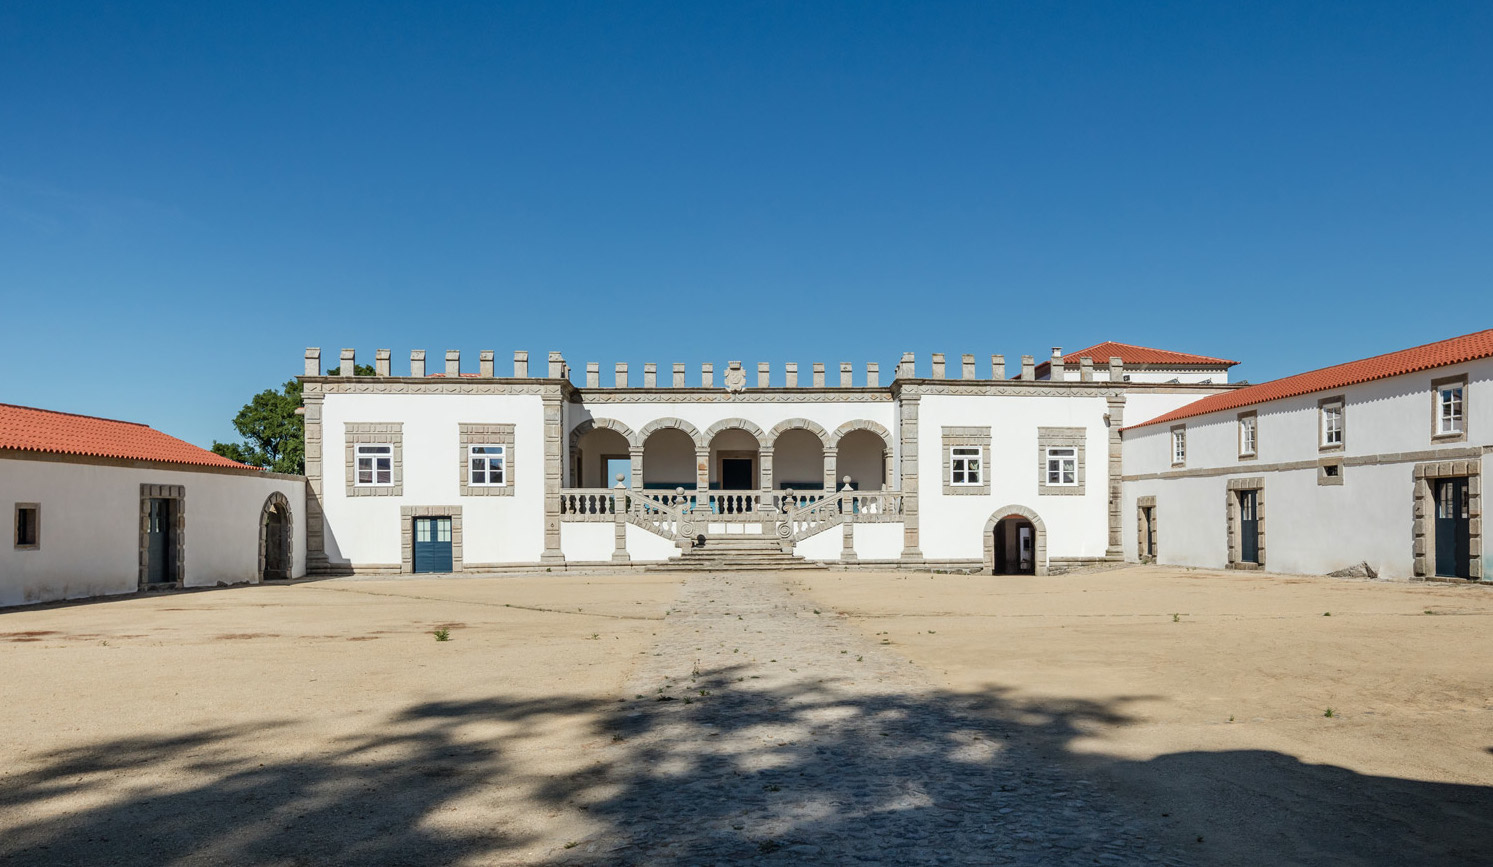 18th century Portuguese manor turned hotel